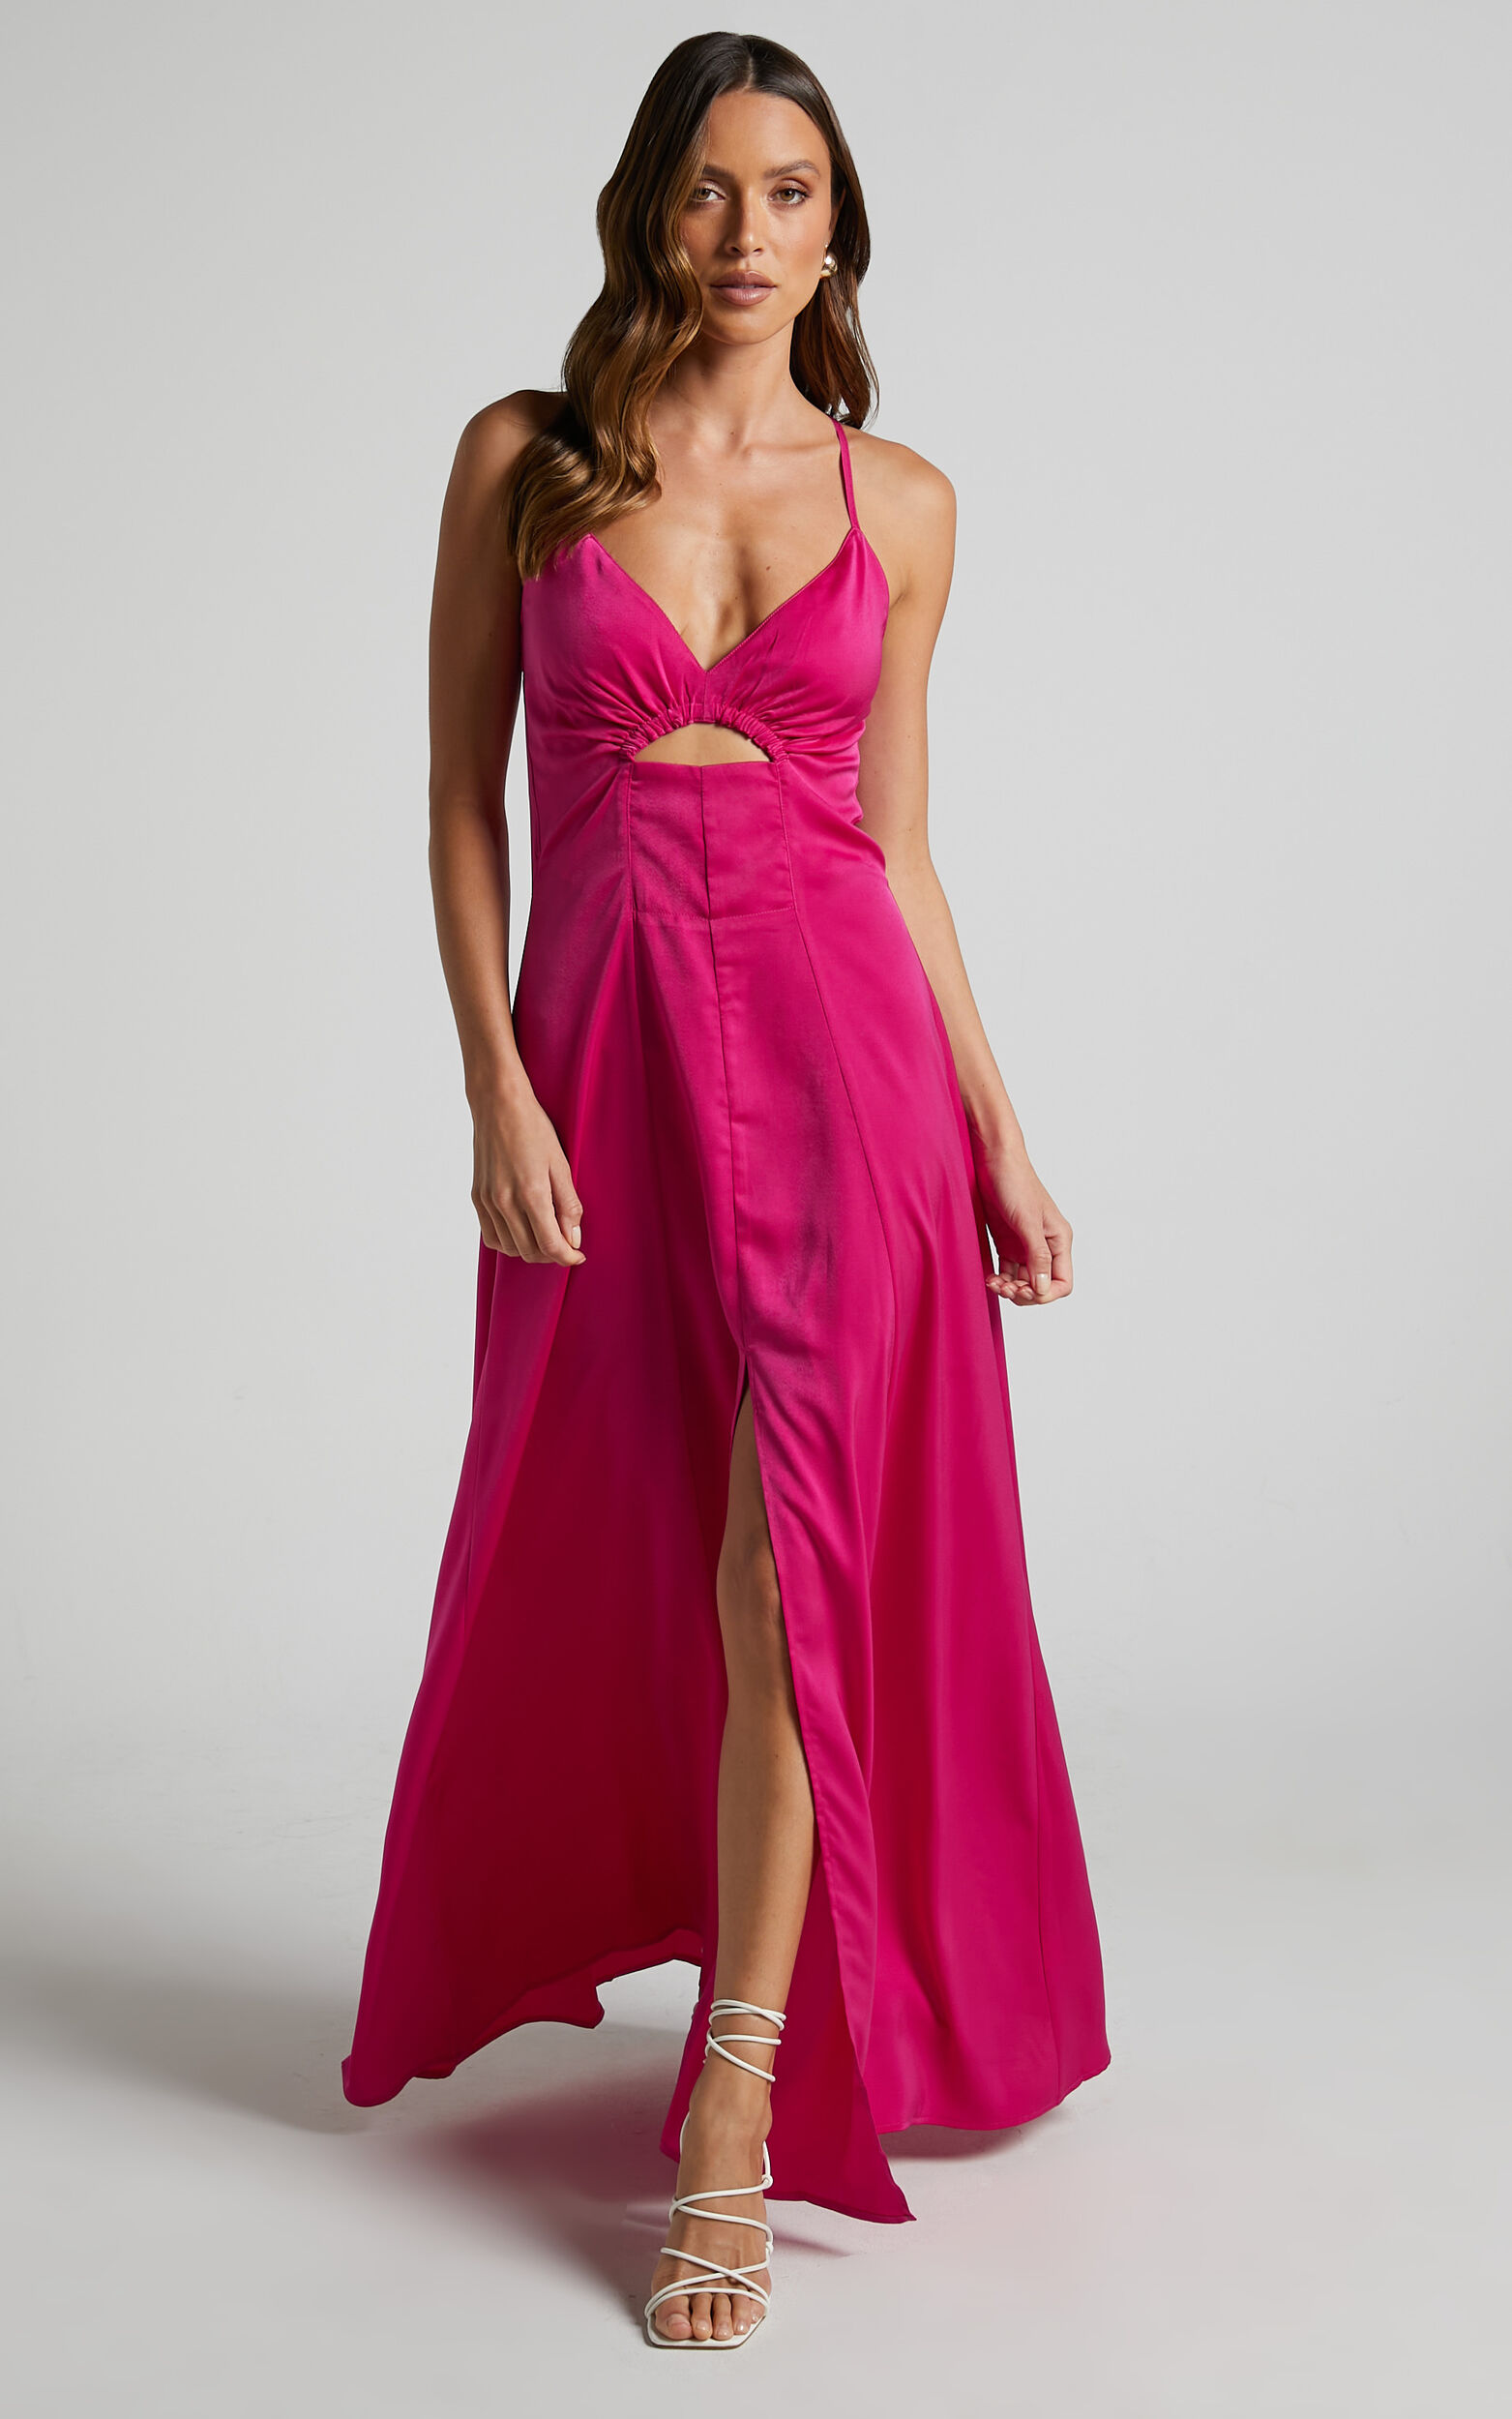 Hazella Midi Dress - V Neck Cut Out Cross Back Satin Dress in Hot Pink - 04, PNK1